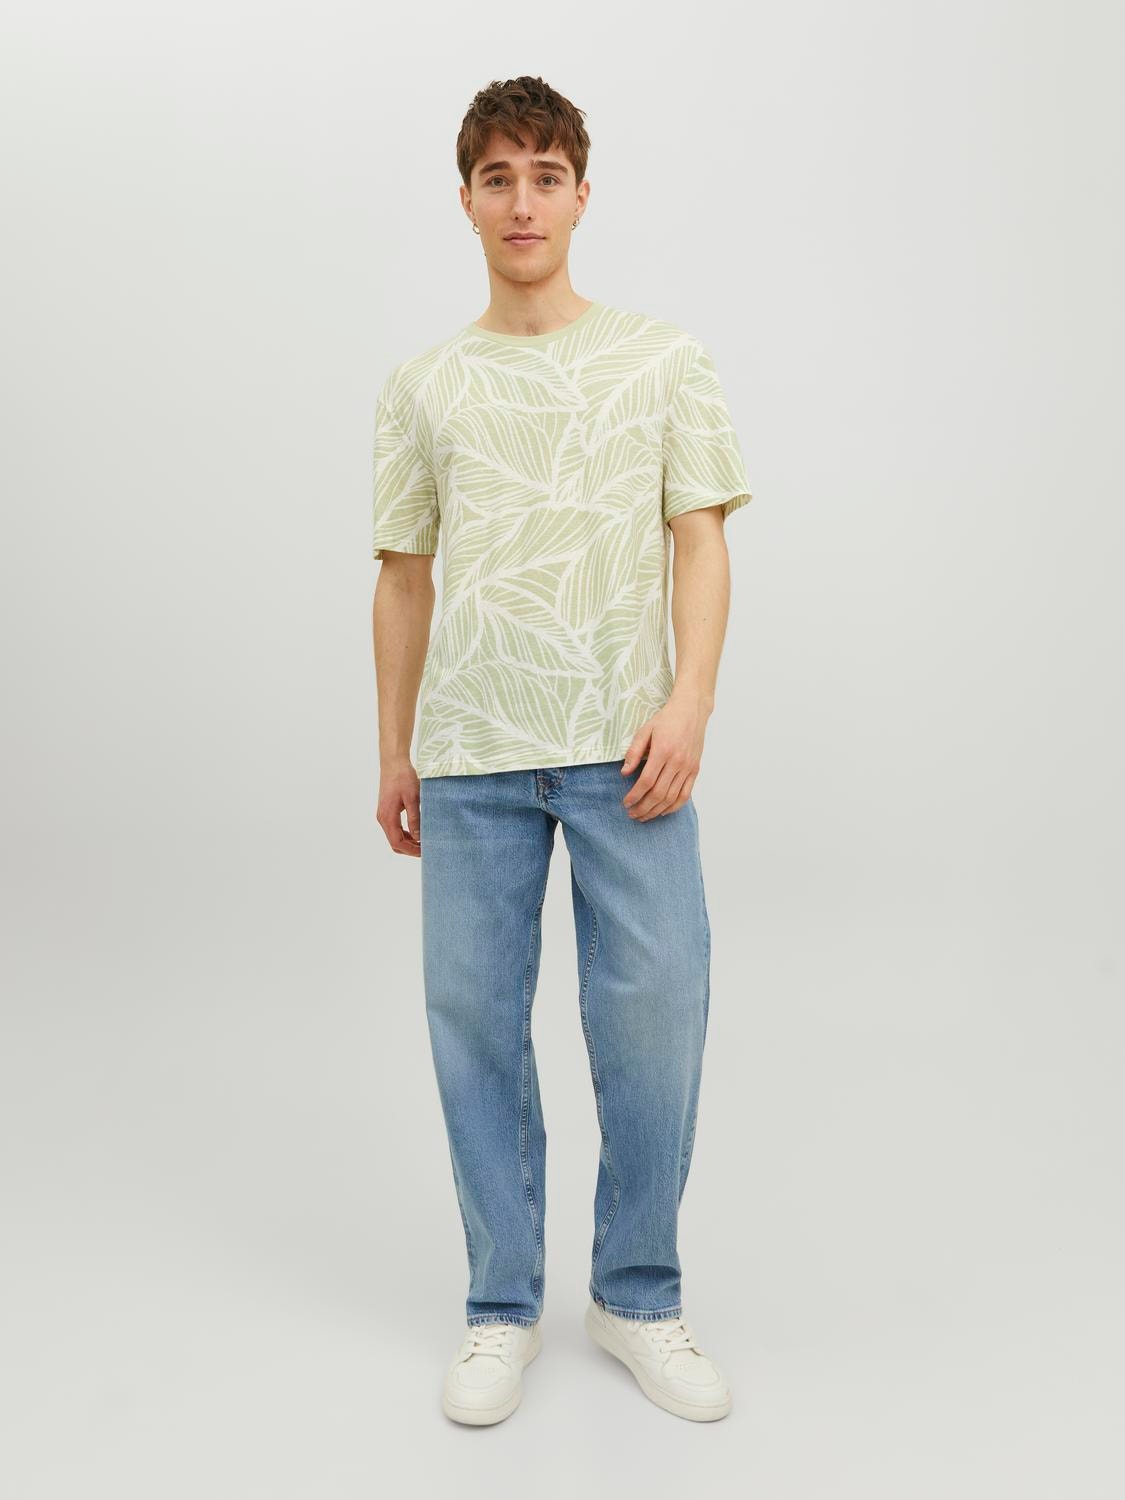 Jack & Jones Camiseta All Over Print Cuello redondo -Celadon Green - 12235972